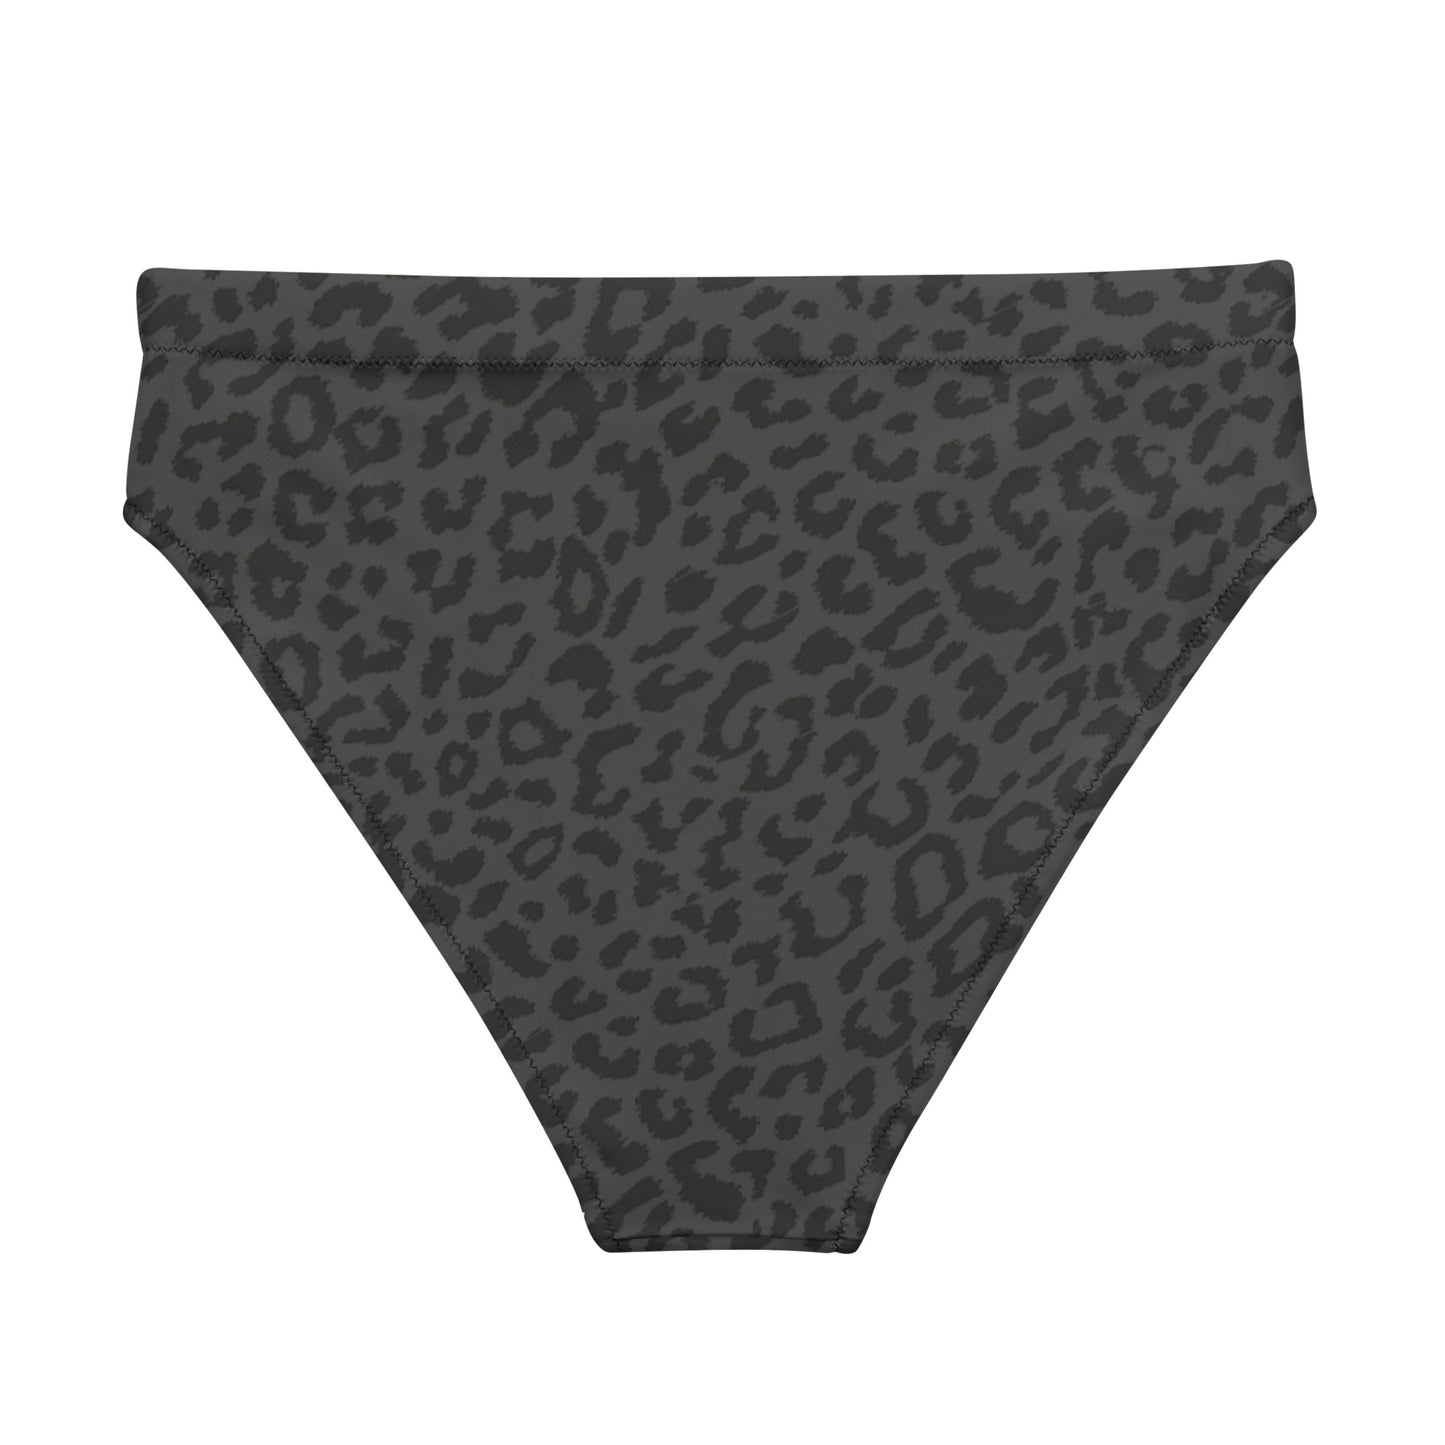 Gray Cheetah Print Eco Friendly High-Waisted Bikini Bottom